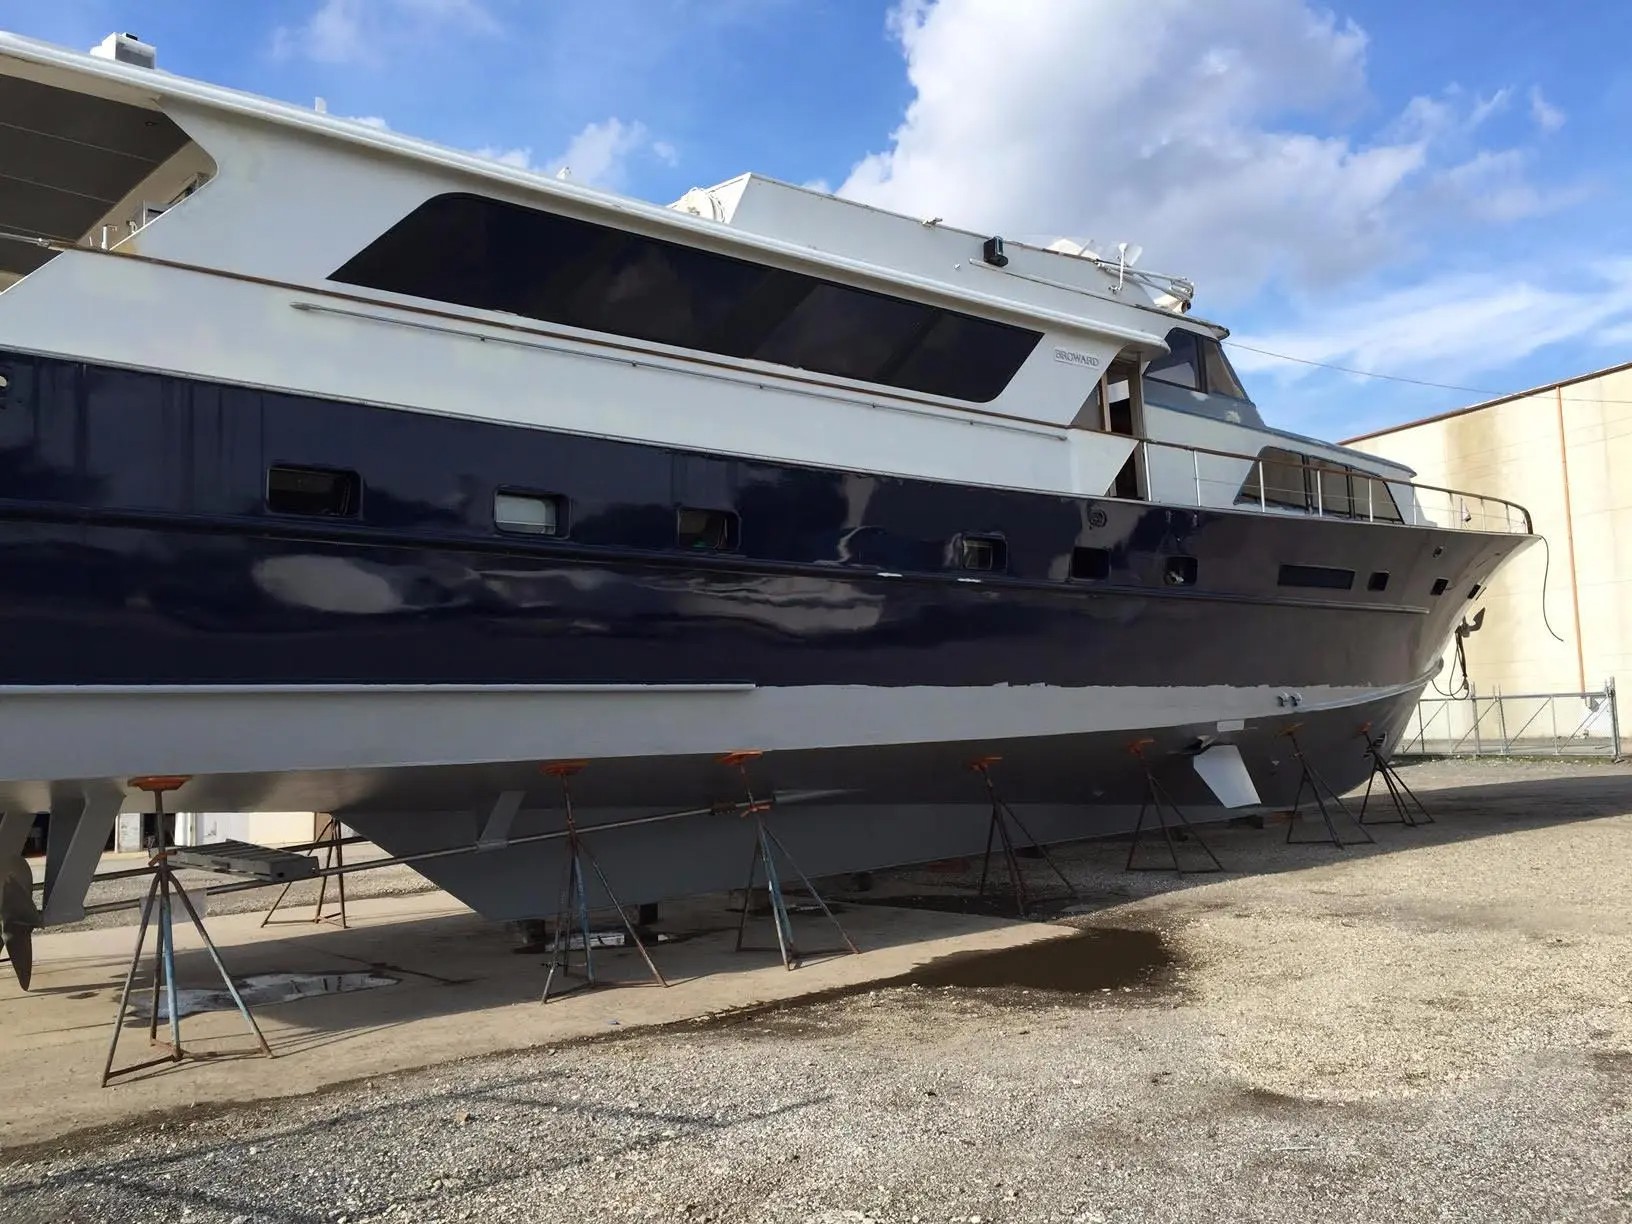 1985 91 foot Broward Raised Bridge Motor Yacht Power boat for sale in Burnham, IL - image 1 